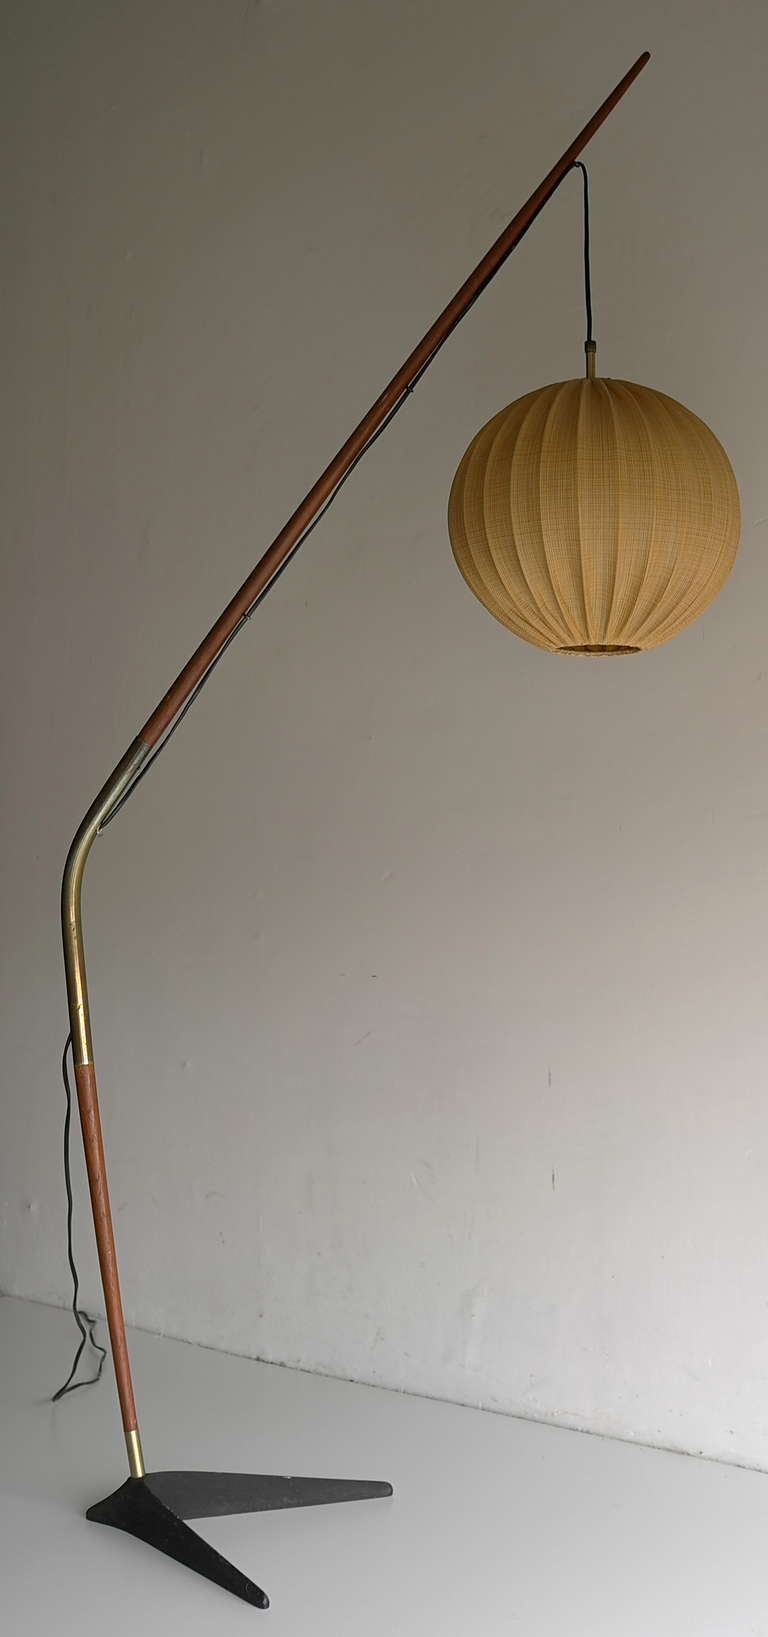 Danish teak and brass floor lamp 1960s

Height 160cm, diameter ball 30cm